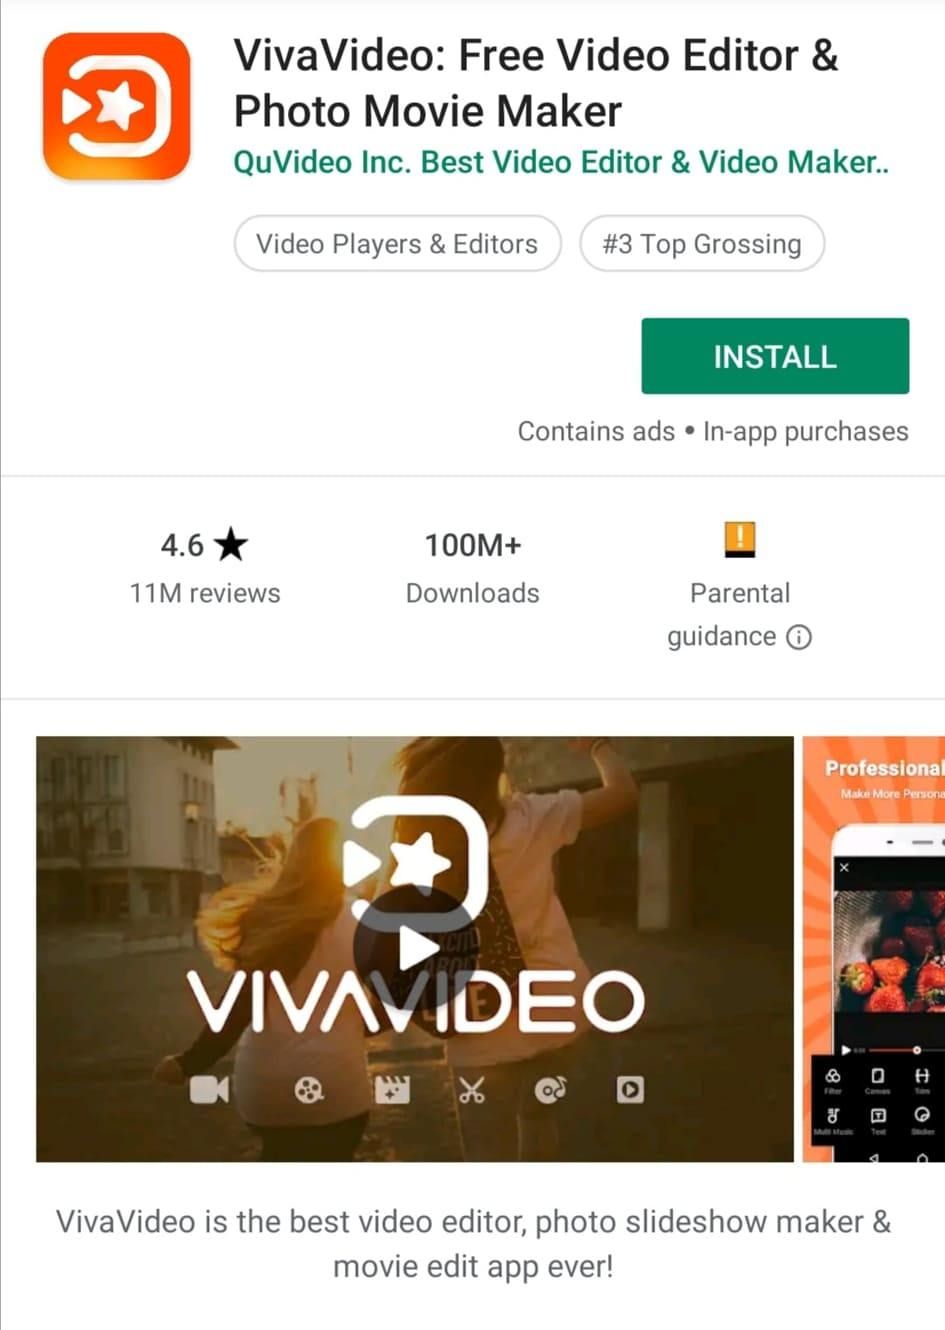 VivaVideo Mobile Video Editor